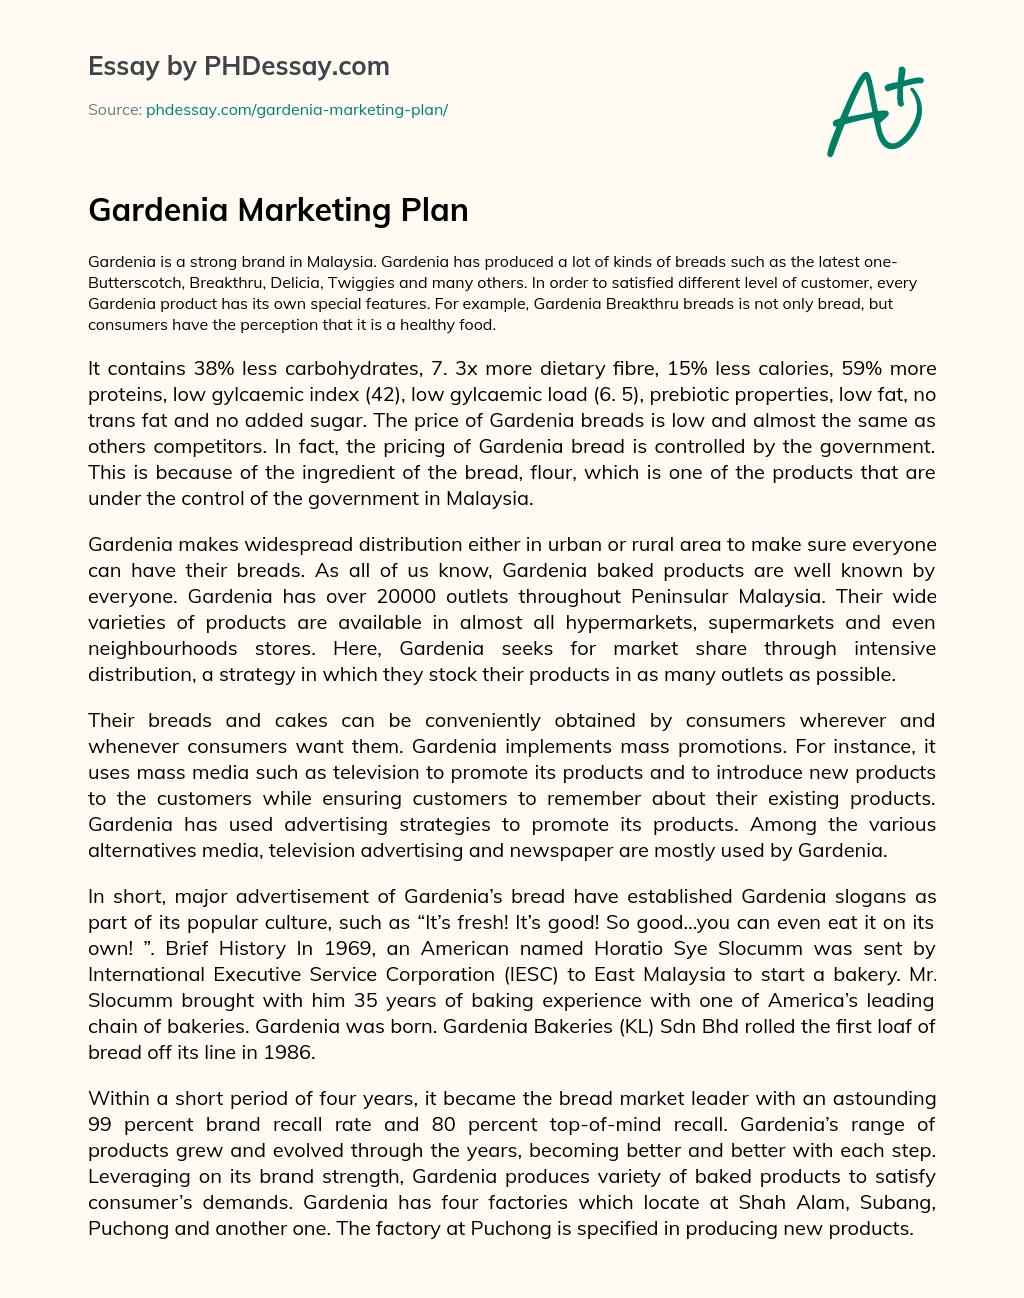 Gardenia Marketing Plan Persuasive Essay essay